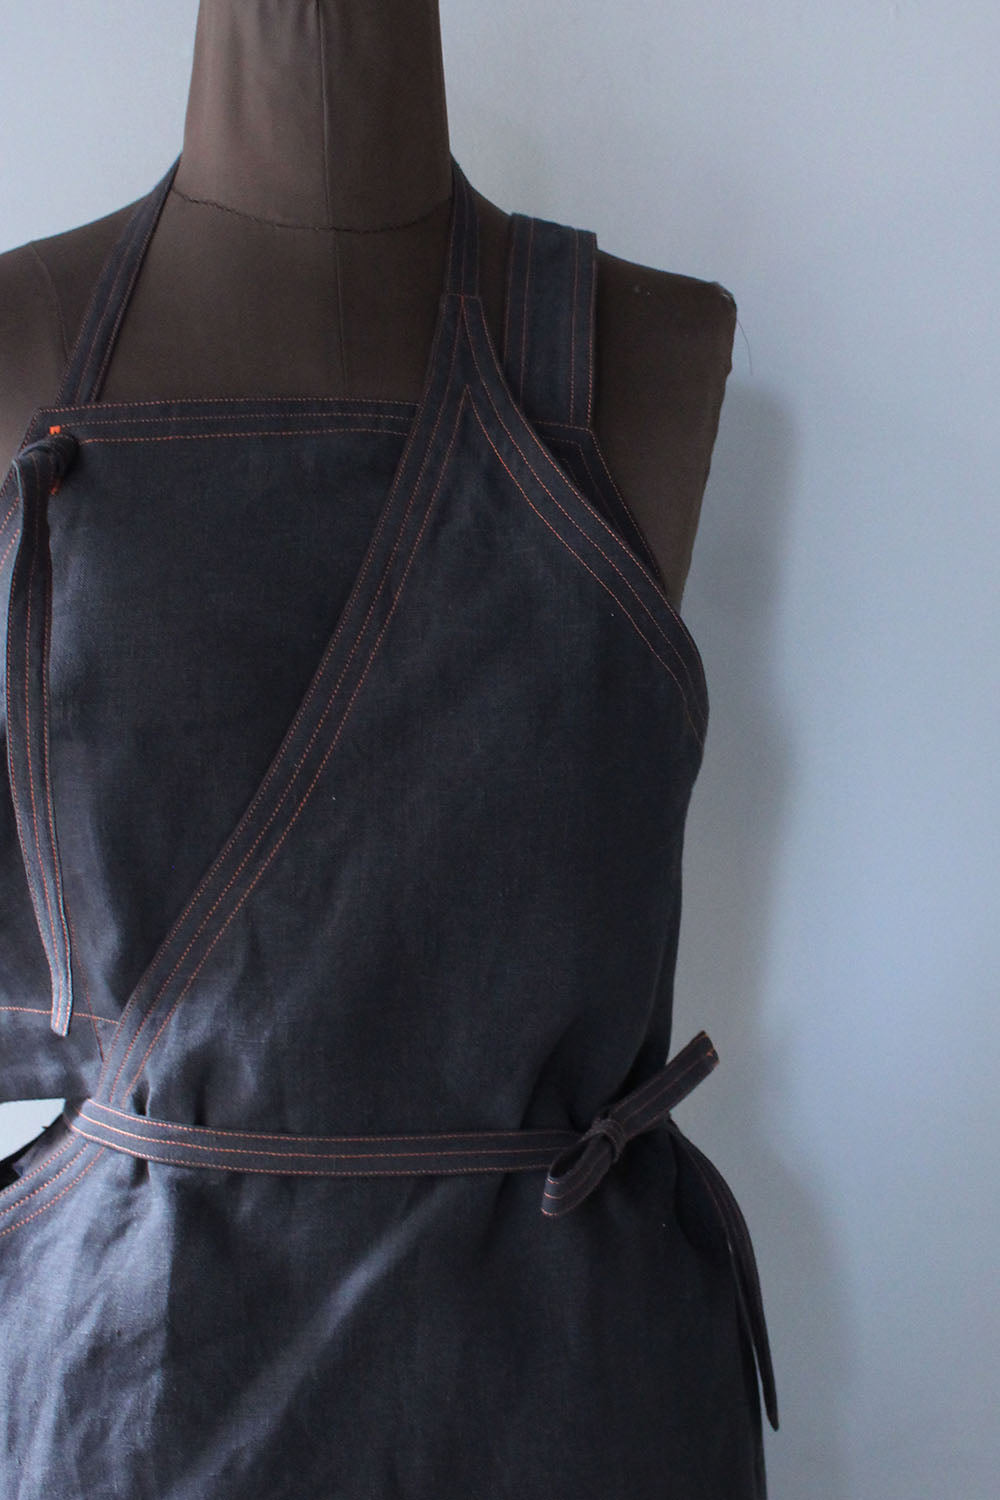 JUN MIKAMI “ linen apron combination (charcoal) “